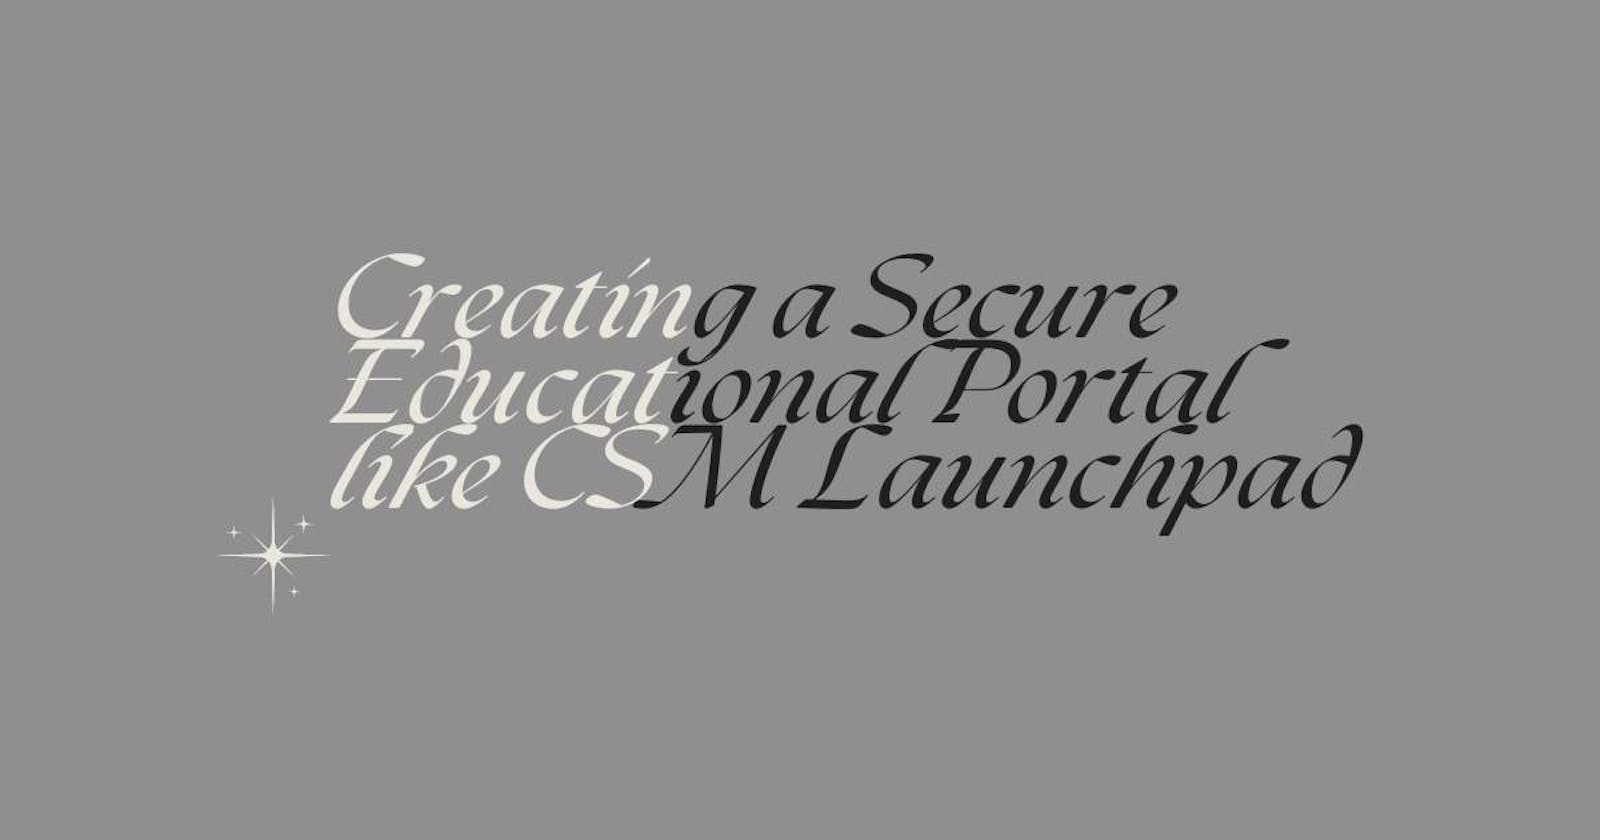 Creating a Secure Educational Portal like CSM Launchpad